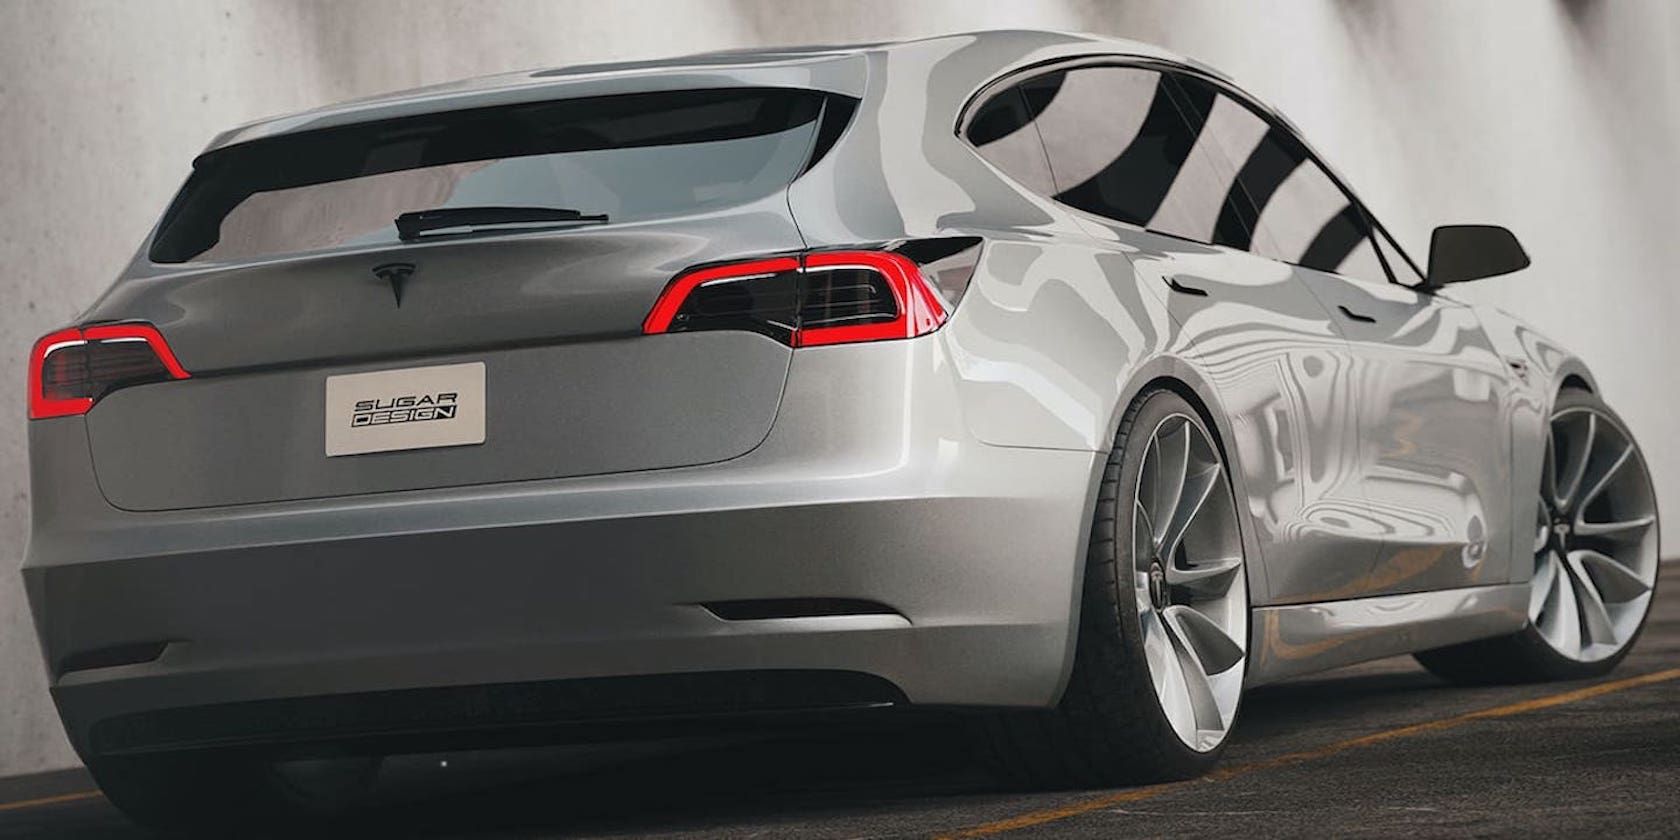 Upcoming Tesla Model 2 Concept Render Wagon by Sugardesign_1 on Instagram